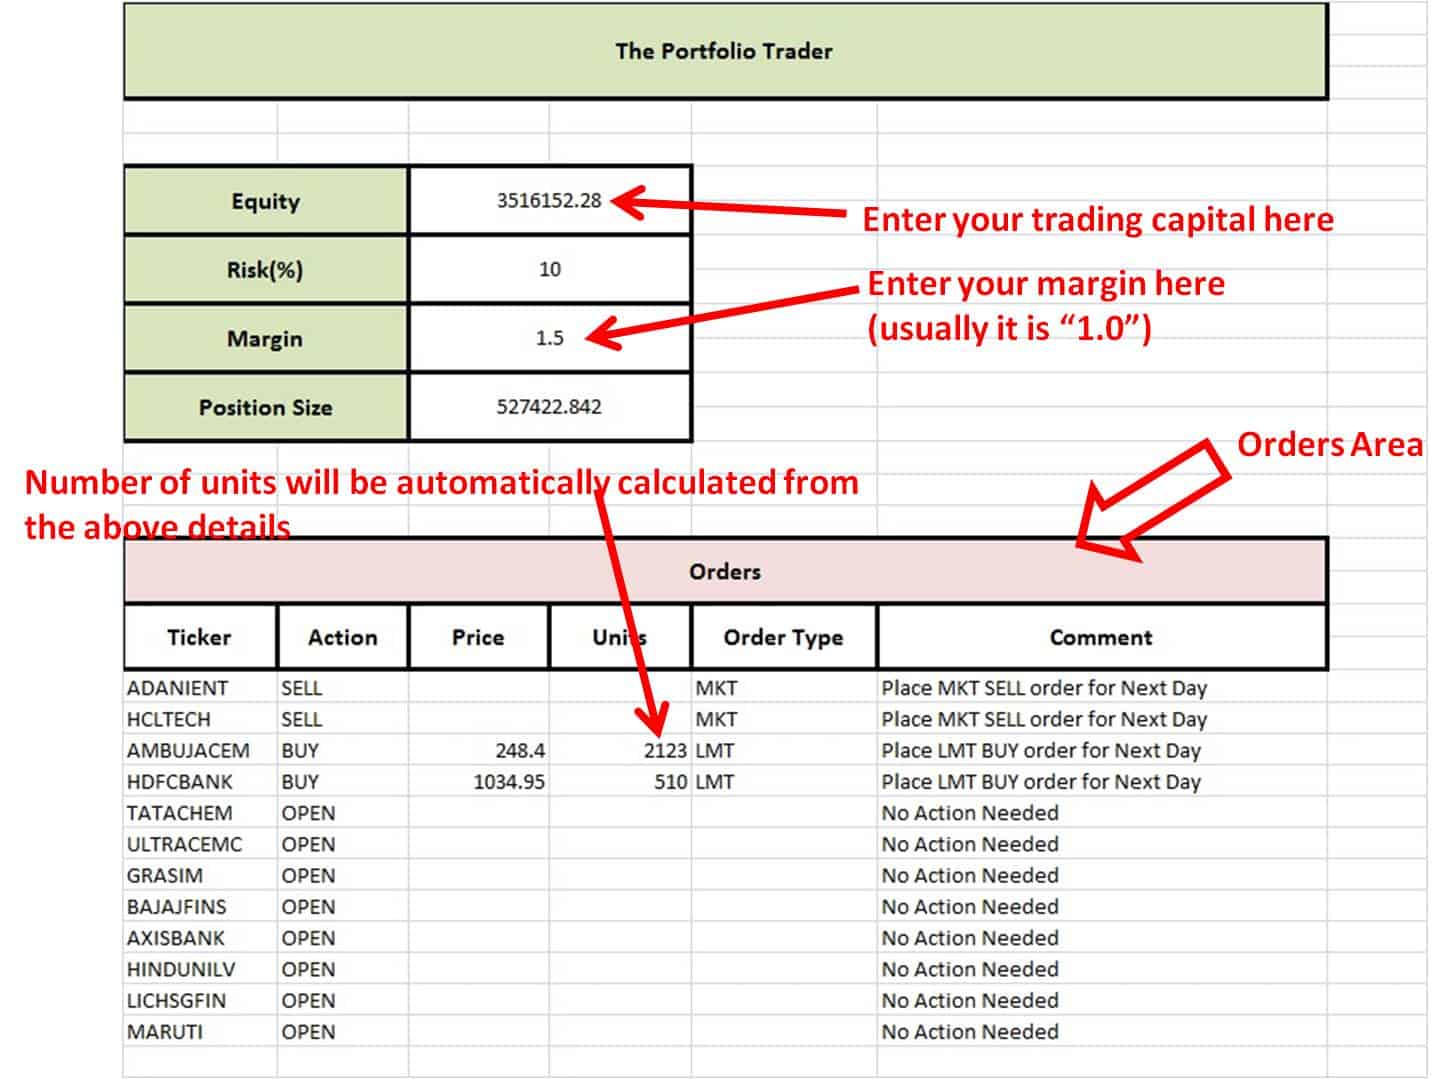 Trades Sheet - The Portfolio Trader - NSE Traiding